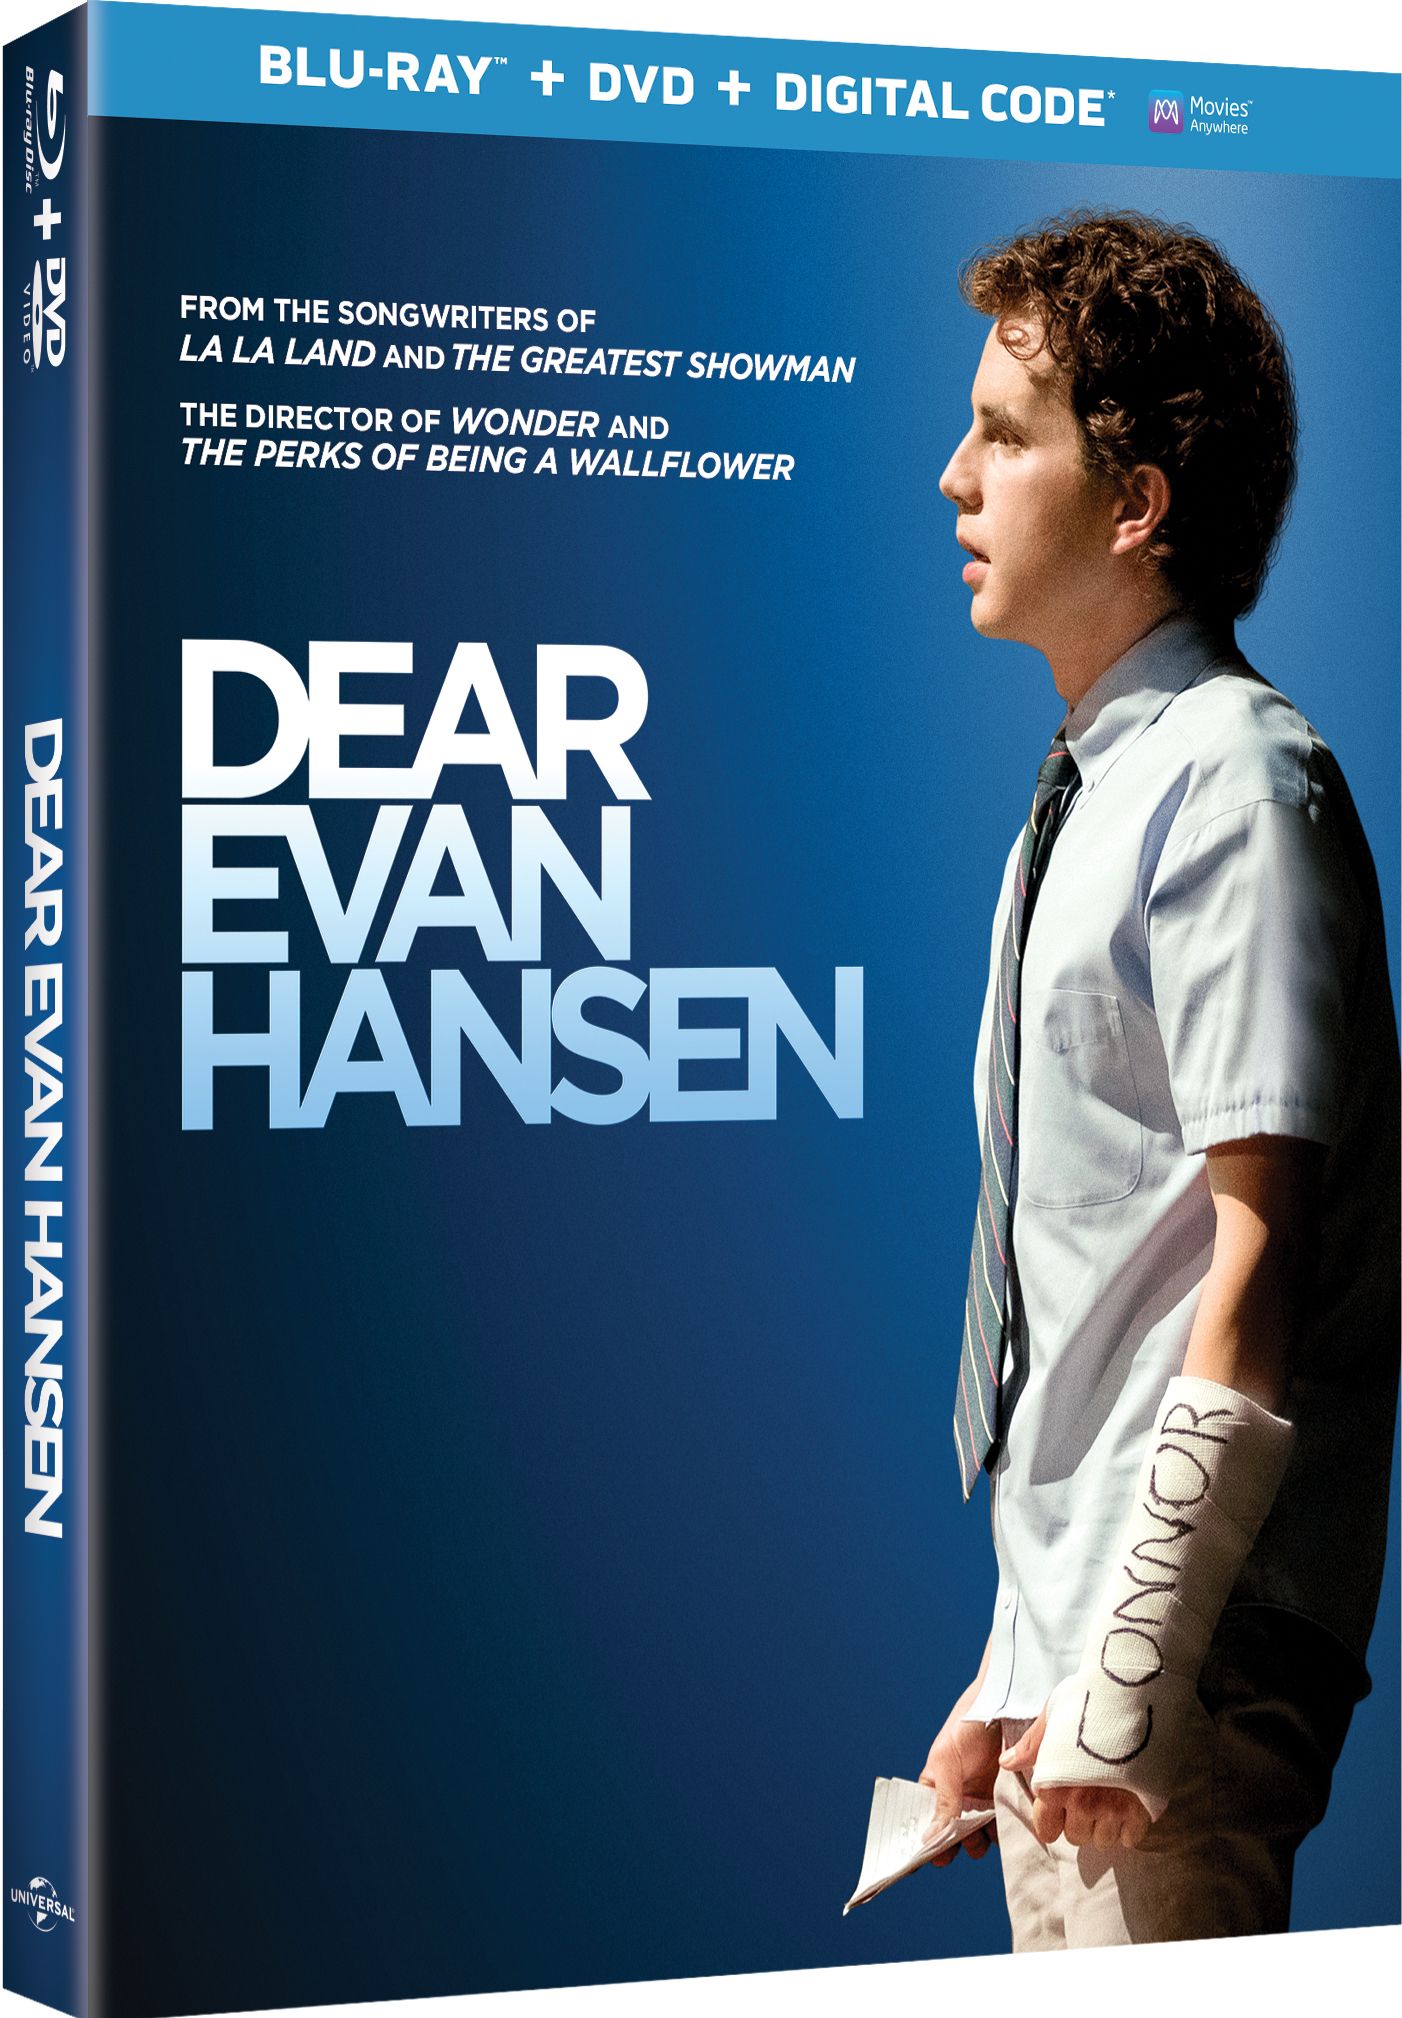 Dear Evan Hansen Blu-ray cover